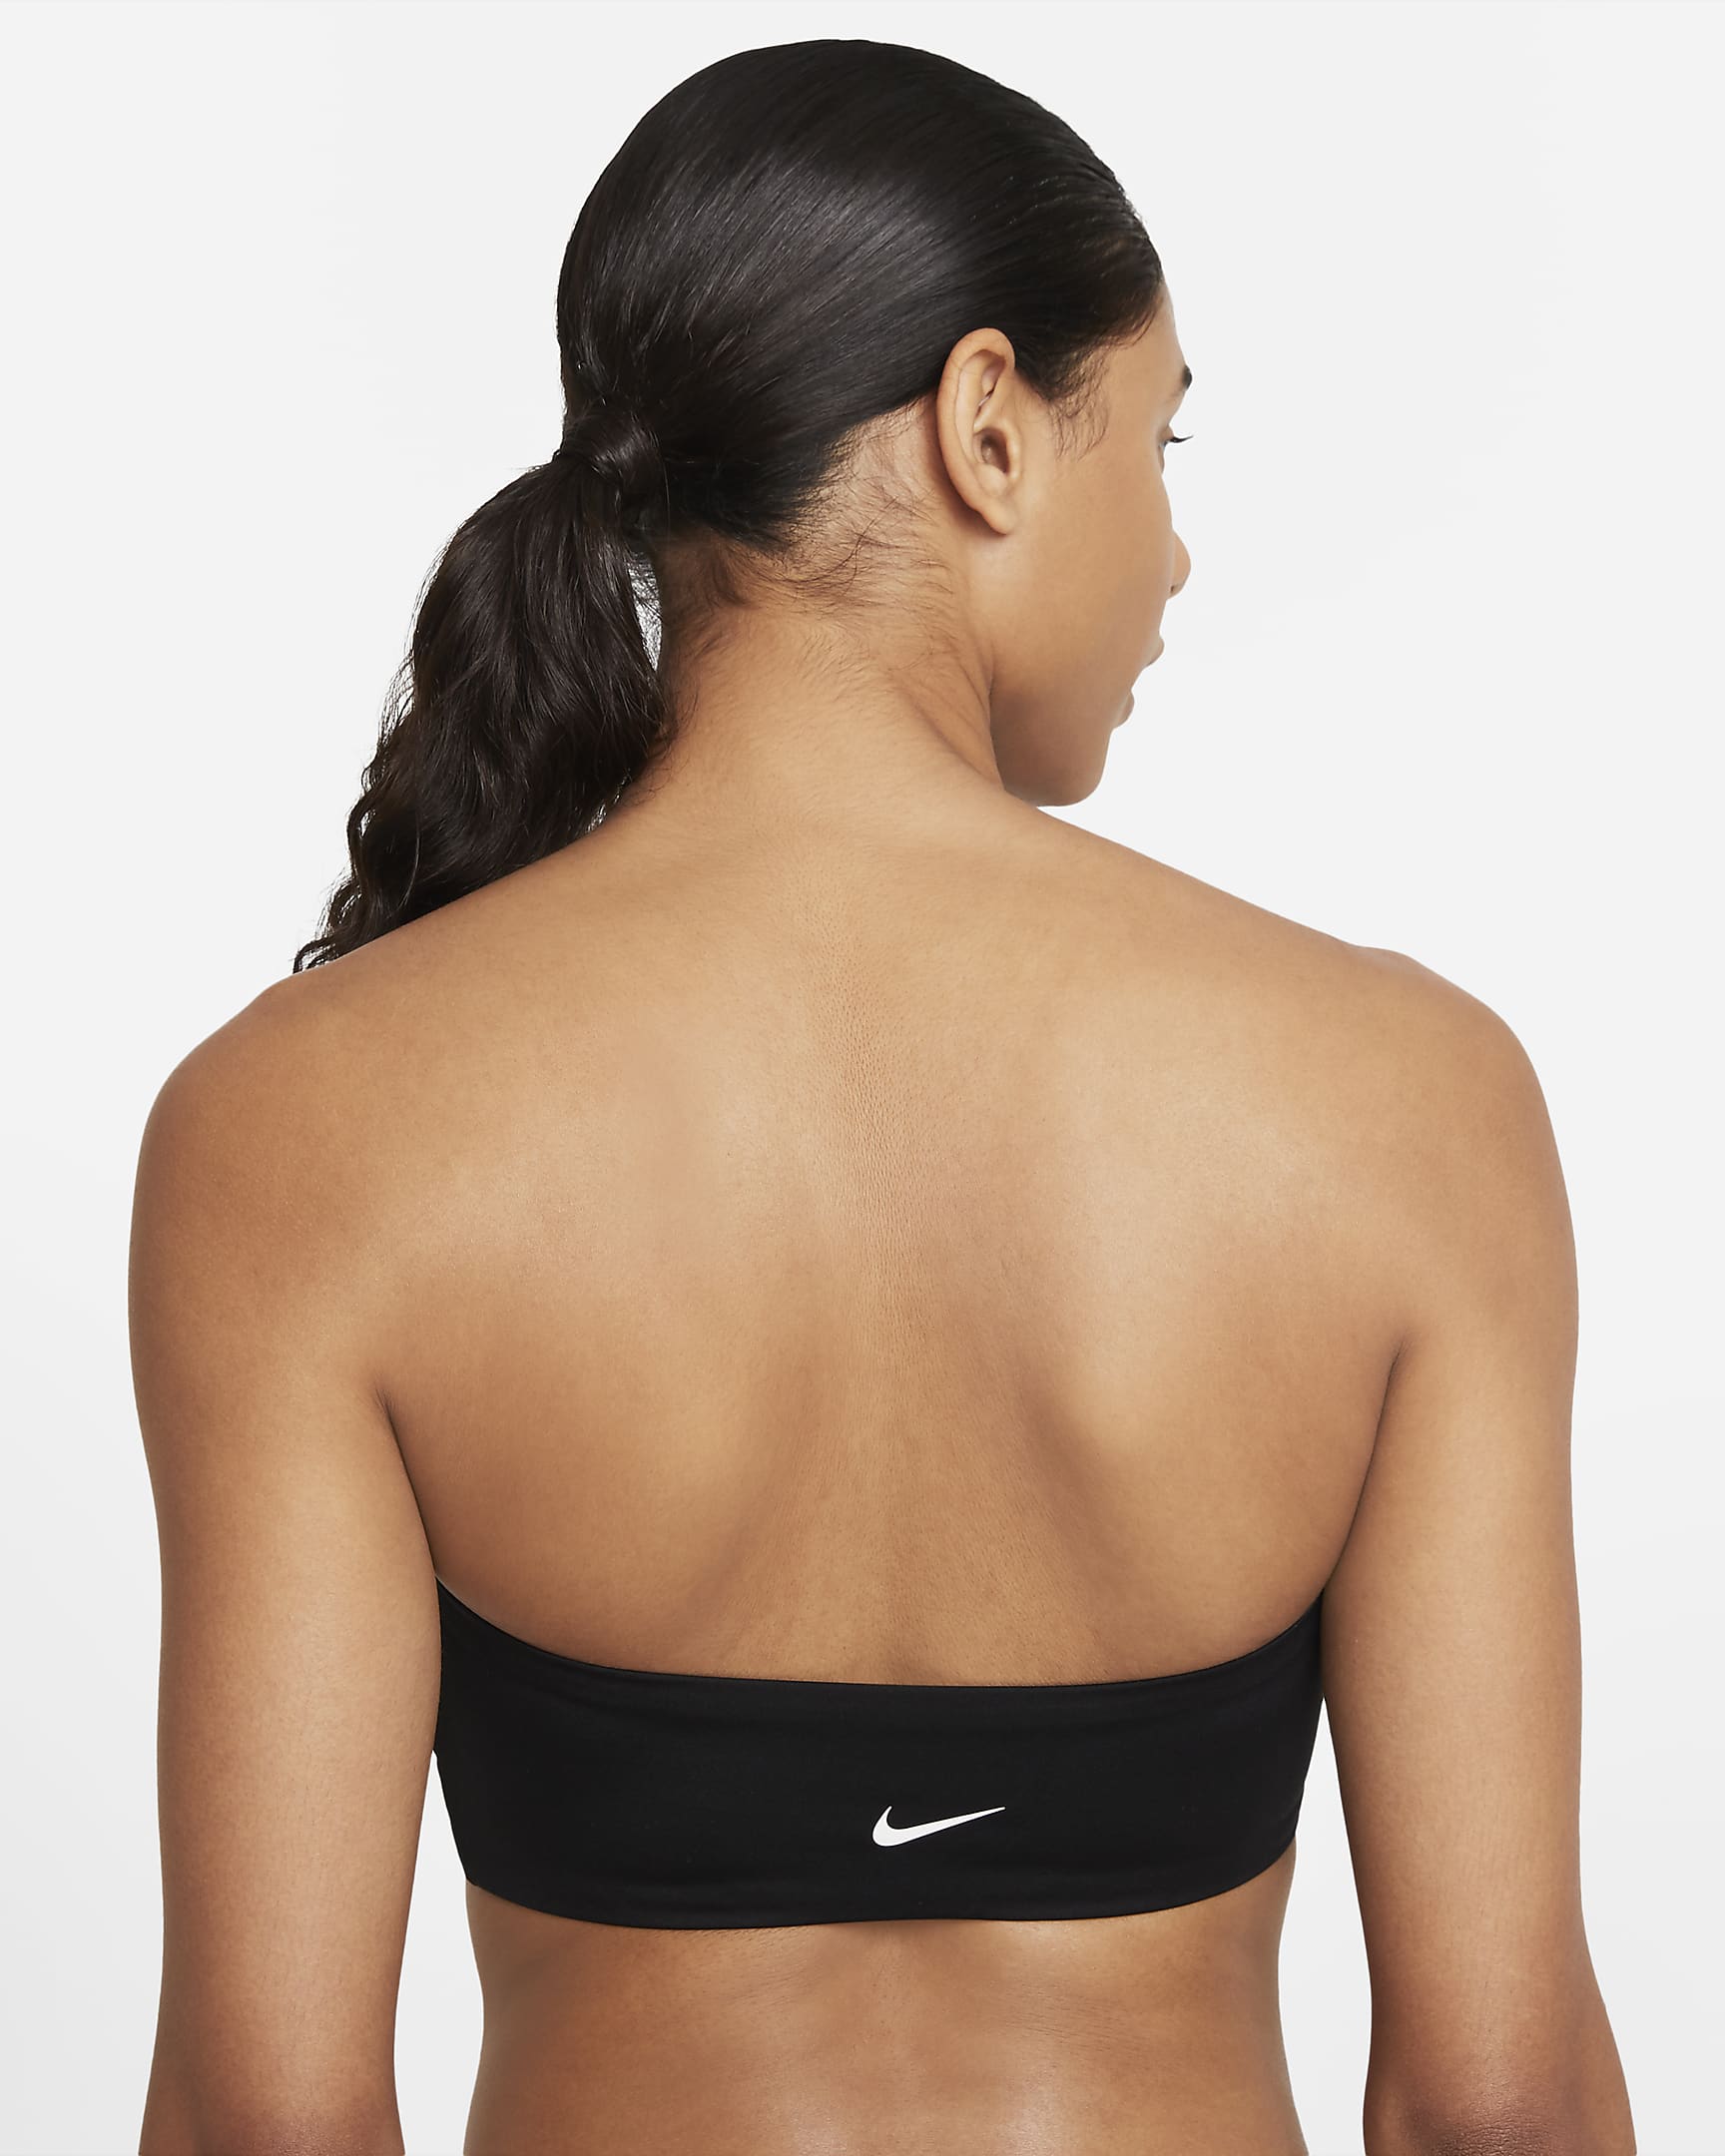 Nike Women's Bandeau Bikini Top - Black/White